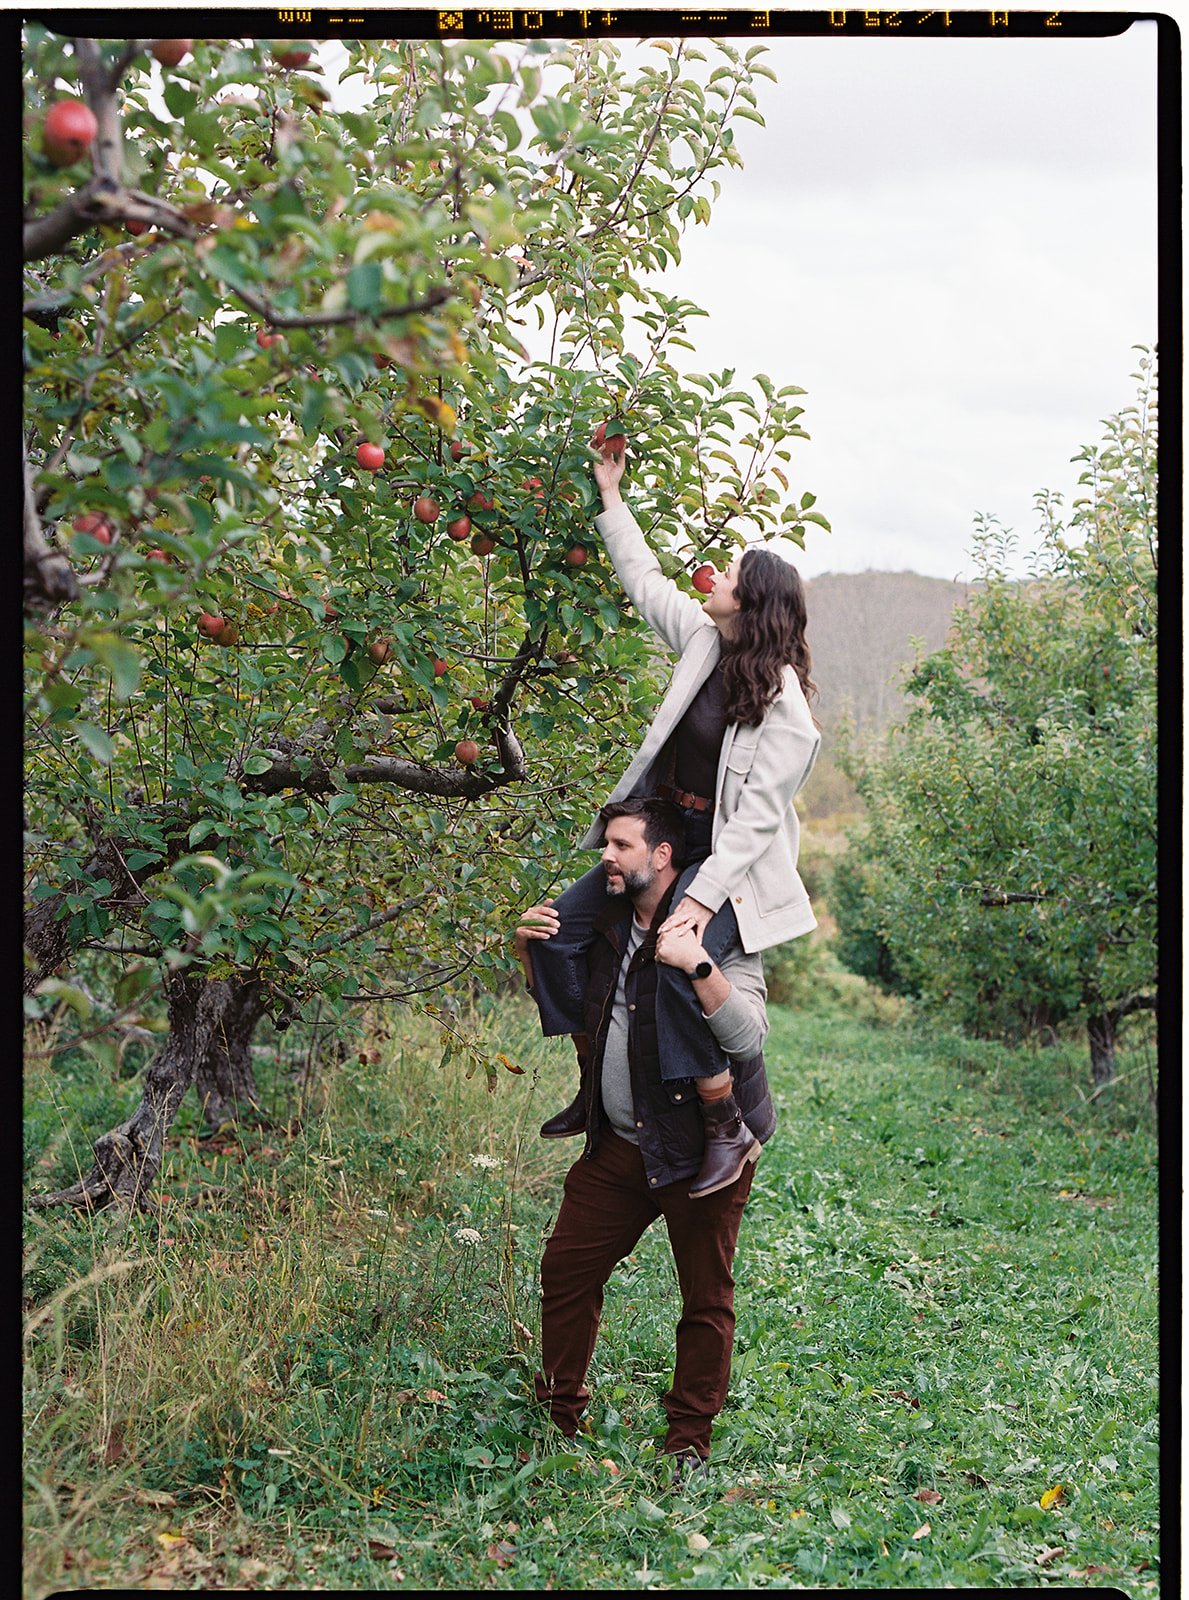 An Apple Picking Wedding Welcome Party - Destination Wedding Photographer - Film  (22).jpg